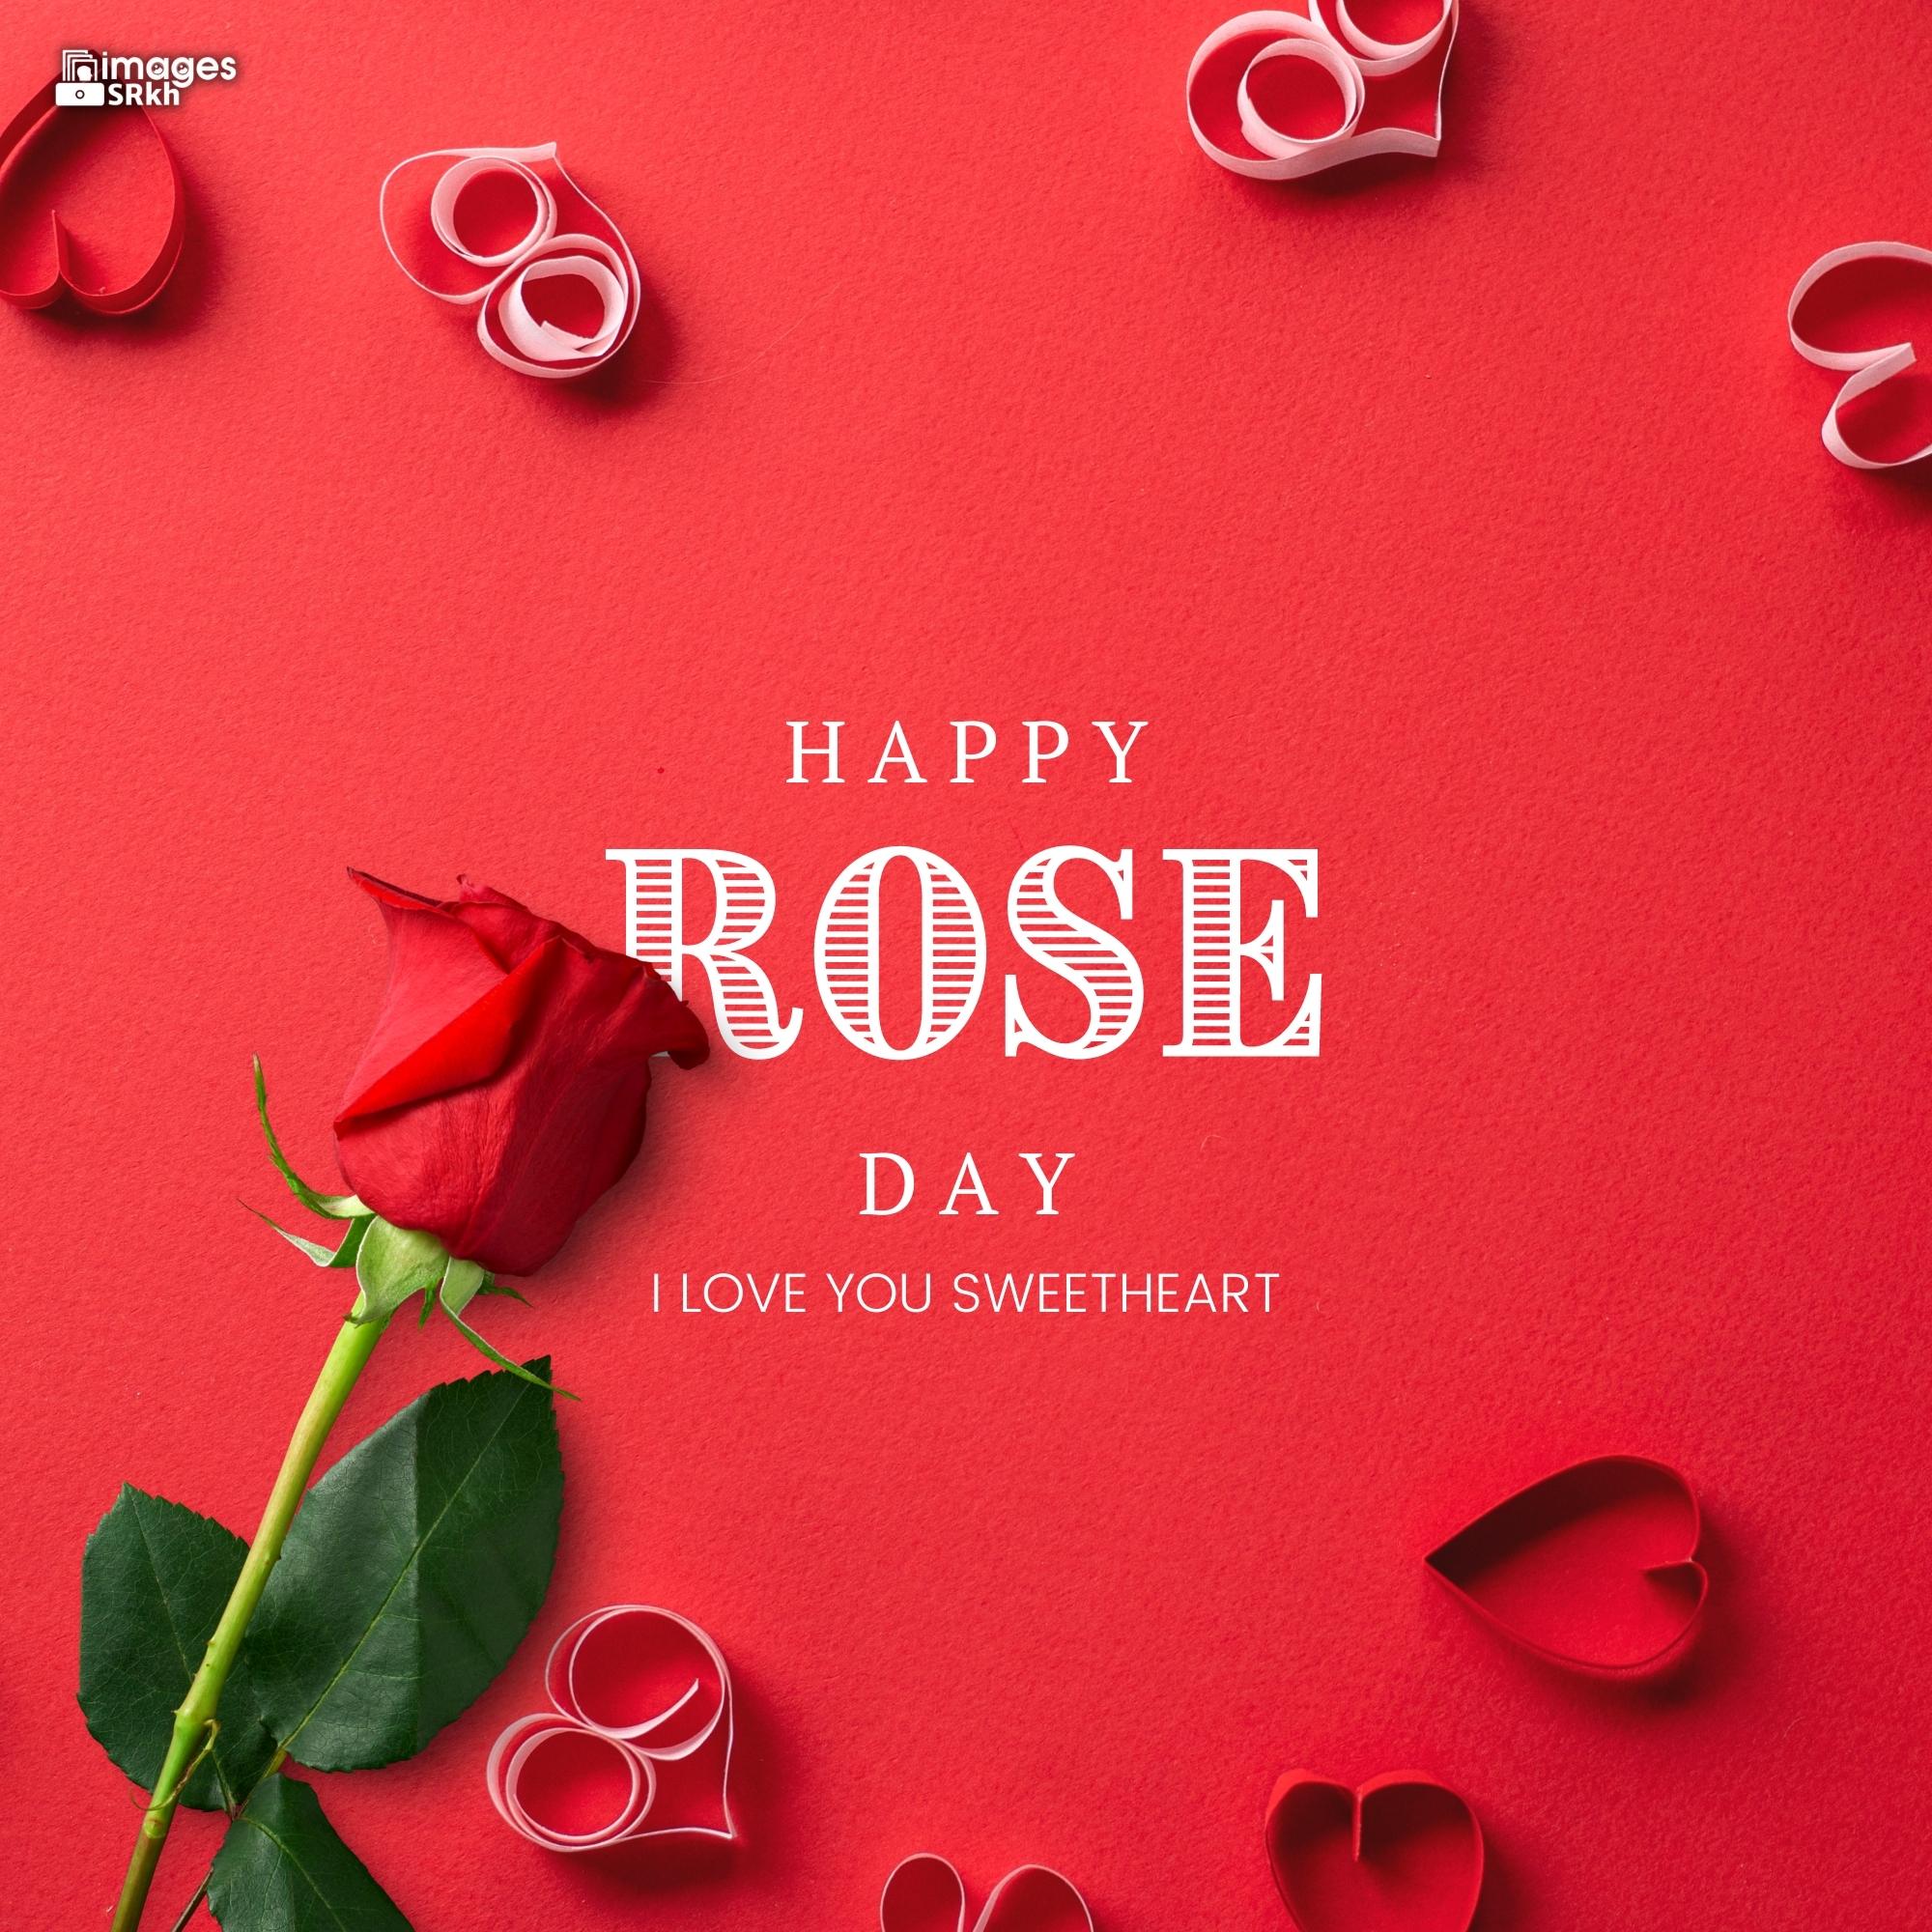 🔥 Happy Rose Day Image Hd Download (71) Download free - Images SRkh